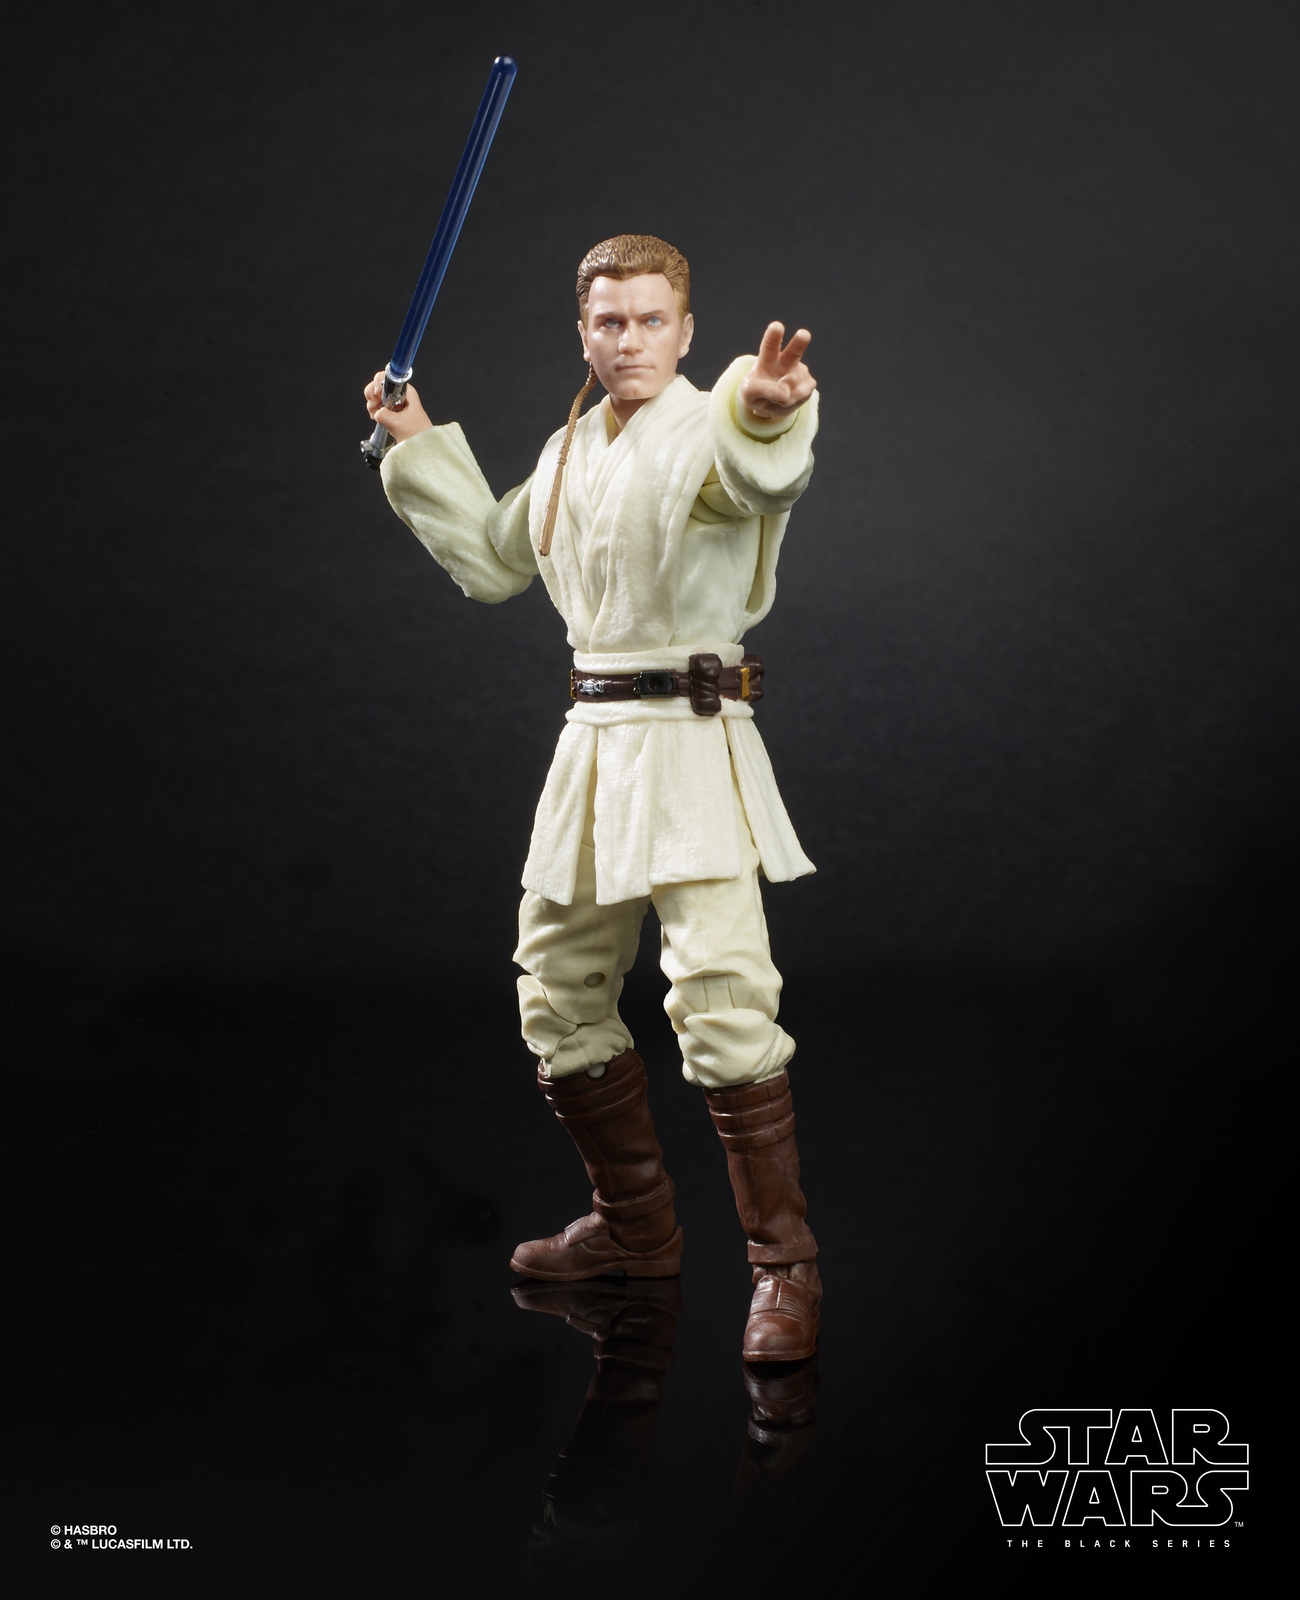 STAR WARS THE BLACK SERIES 6-INCH Figure Assortment - Obi-Wan Kenobi (oop 1).jpg